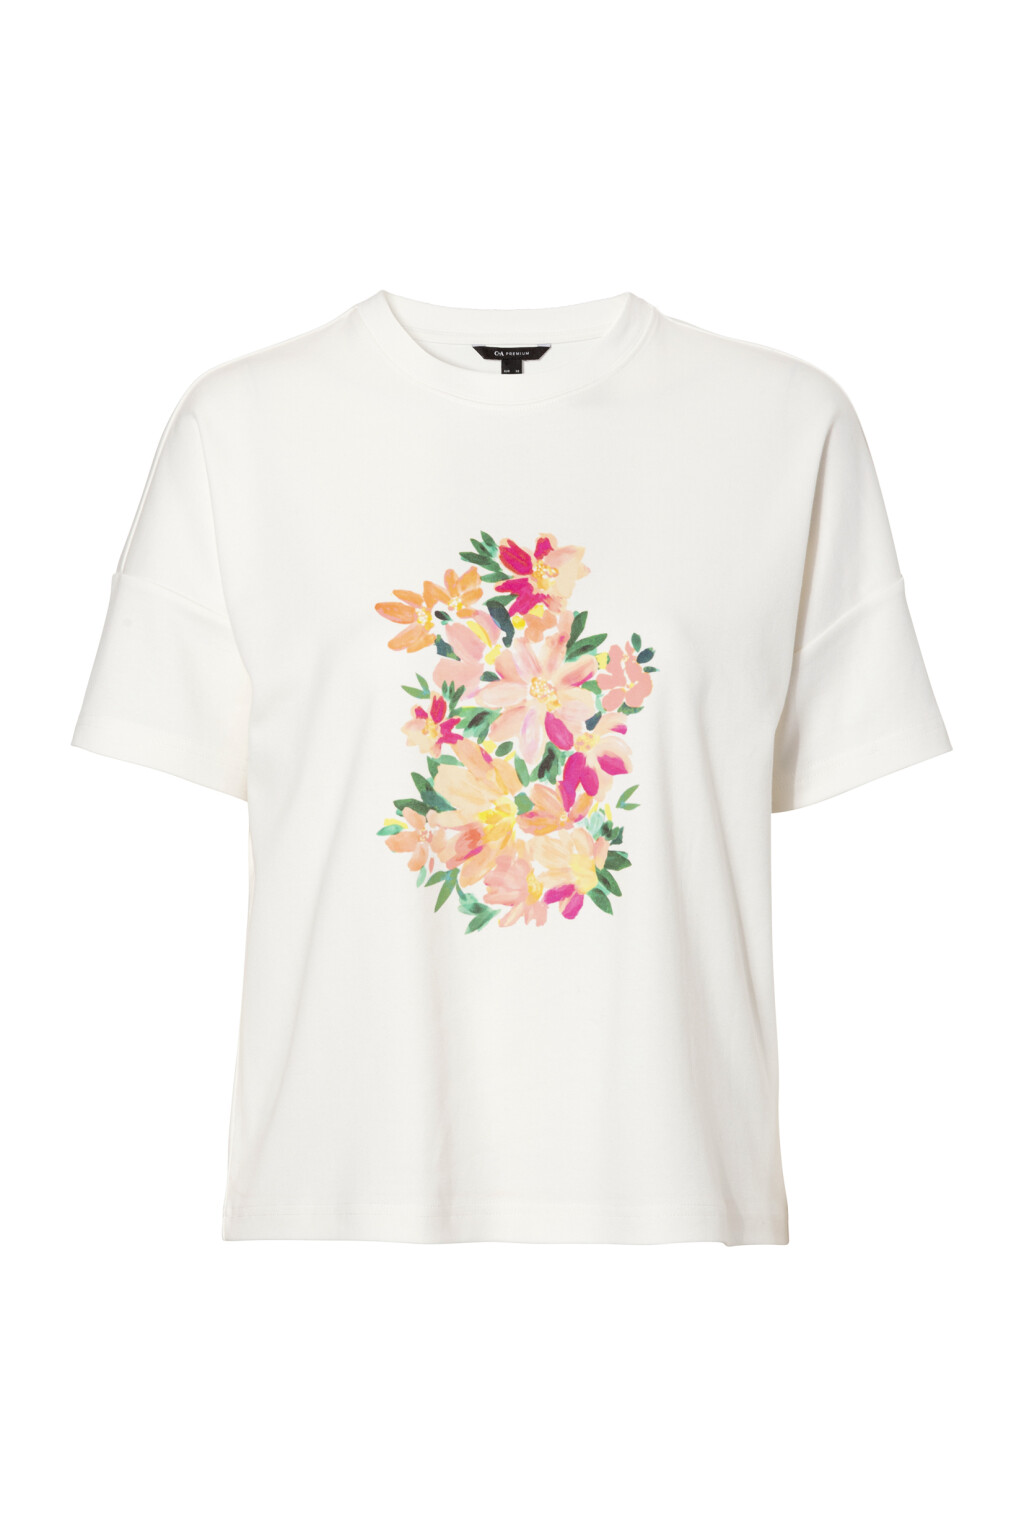 C&A Botanical Garden kolekcija, bijela majica s printom, 129,90 kn